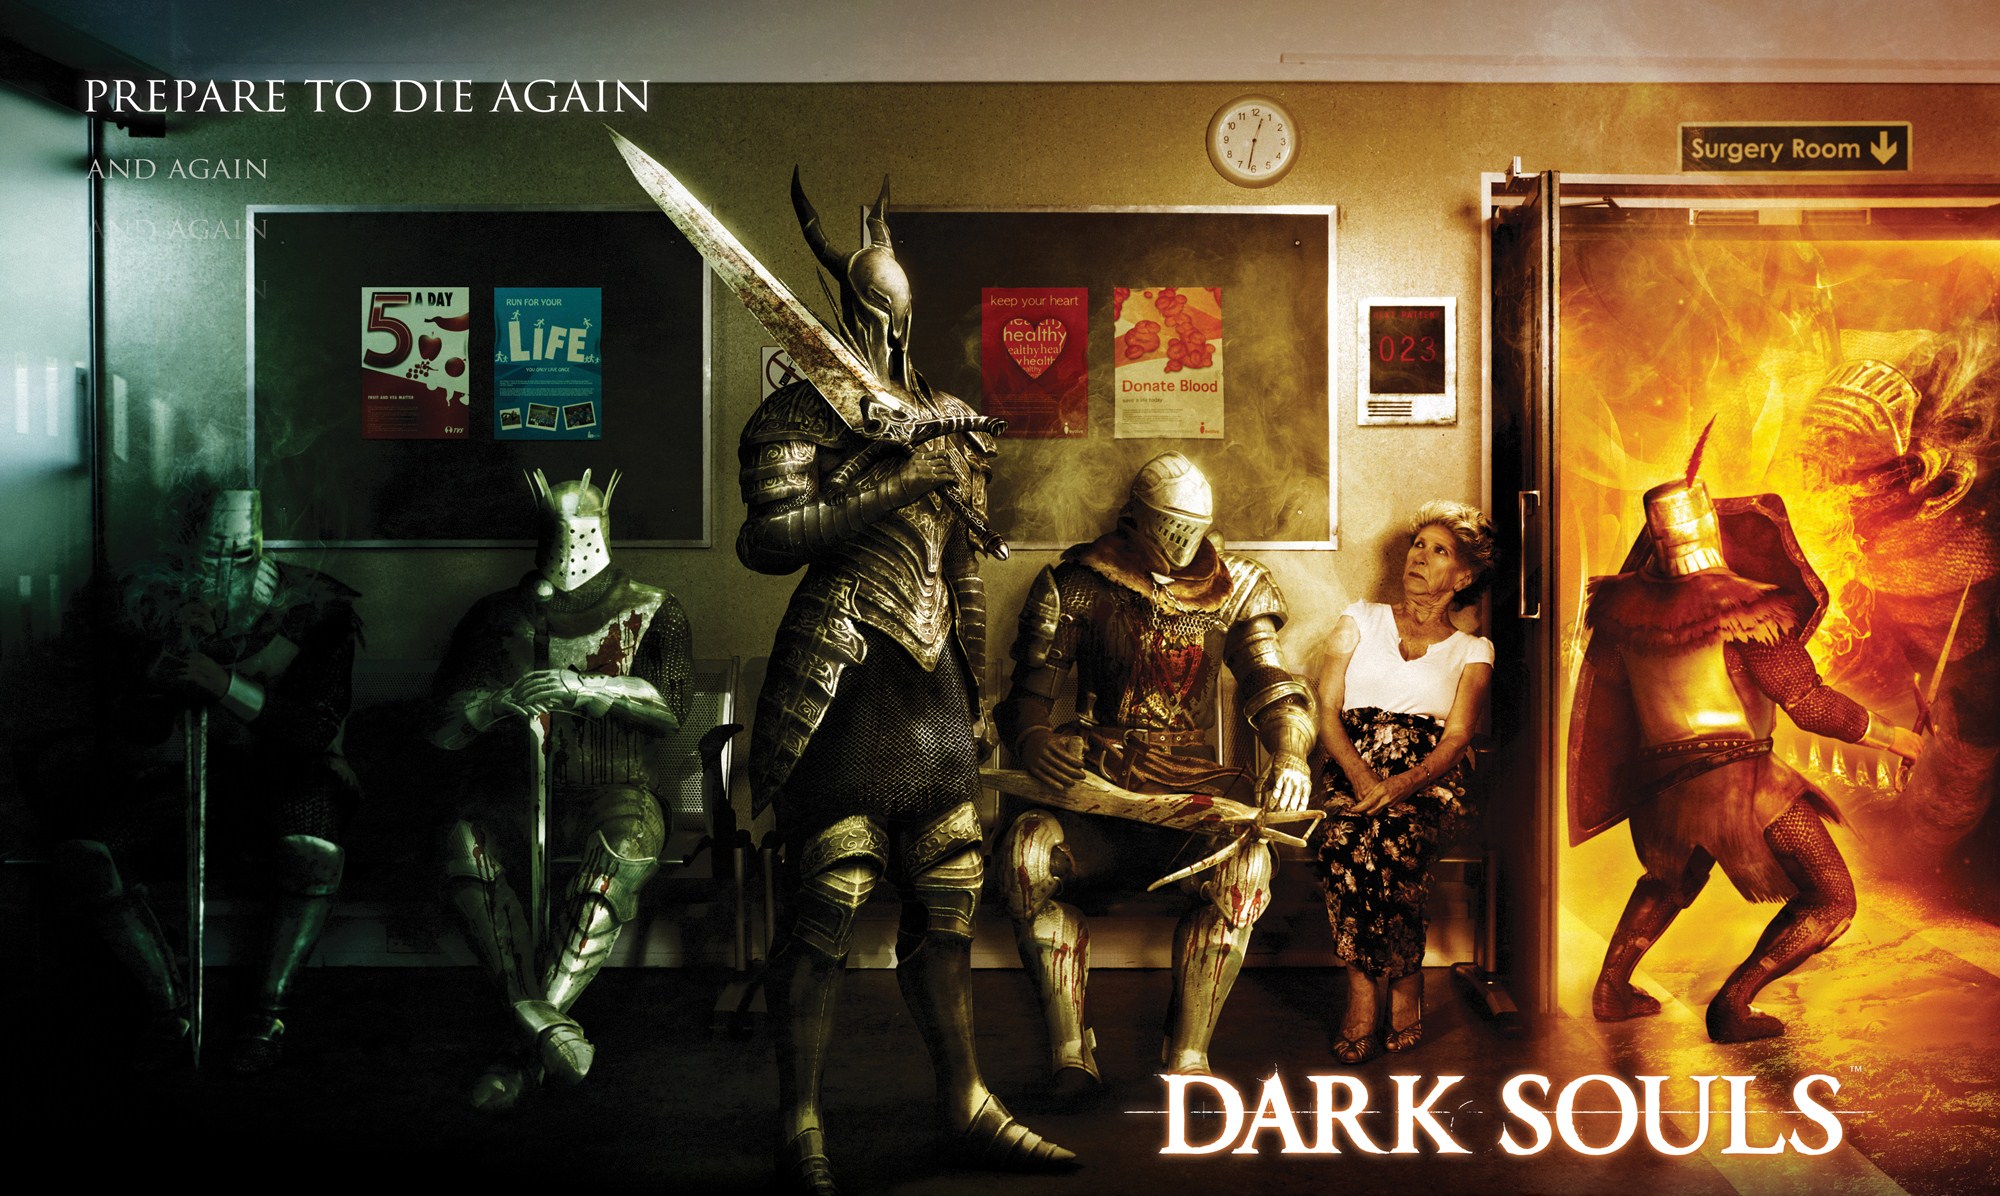 General 2000x1196 Dark Souls video games fire artwork Solaire of Astora 2011 (Year) video game art humor armor